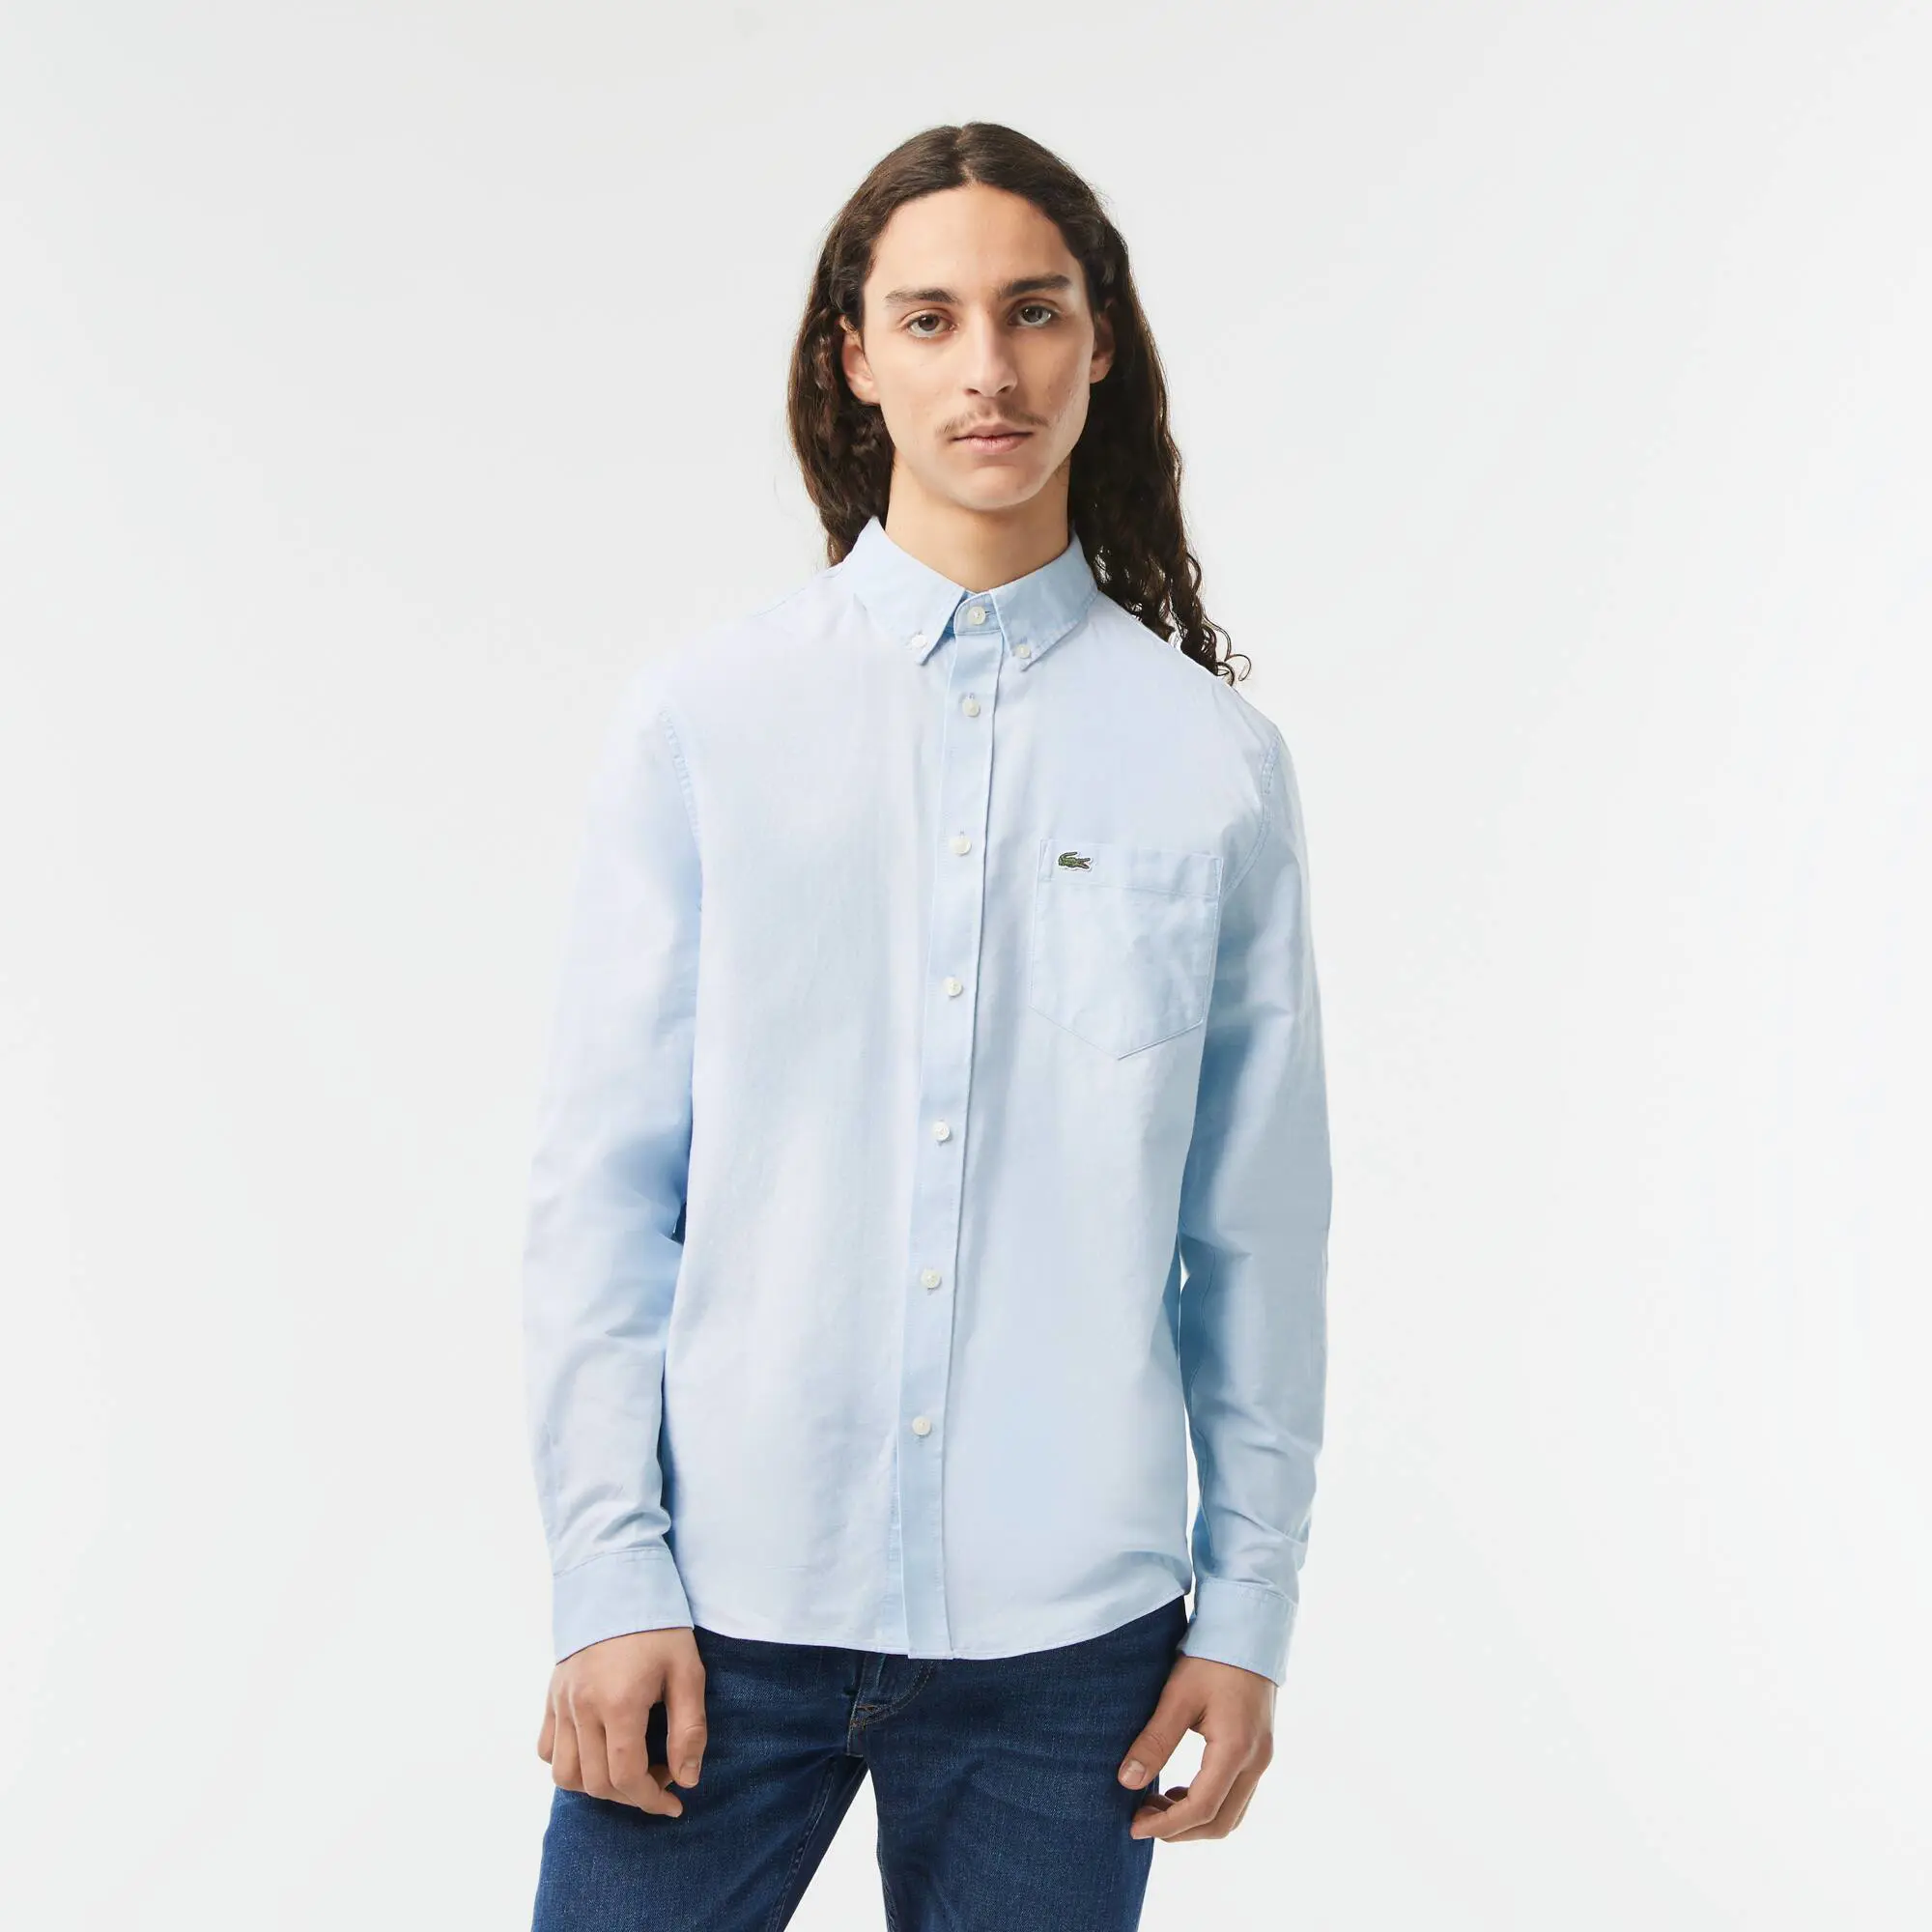 Lacoste Men’s Buttoned Collar Oxford Cotton Shirt. 1